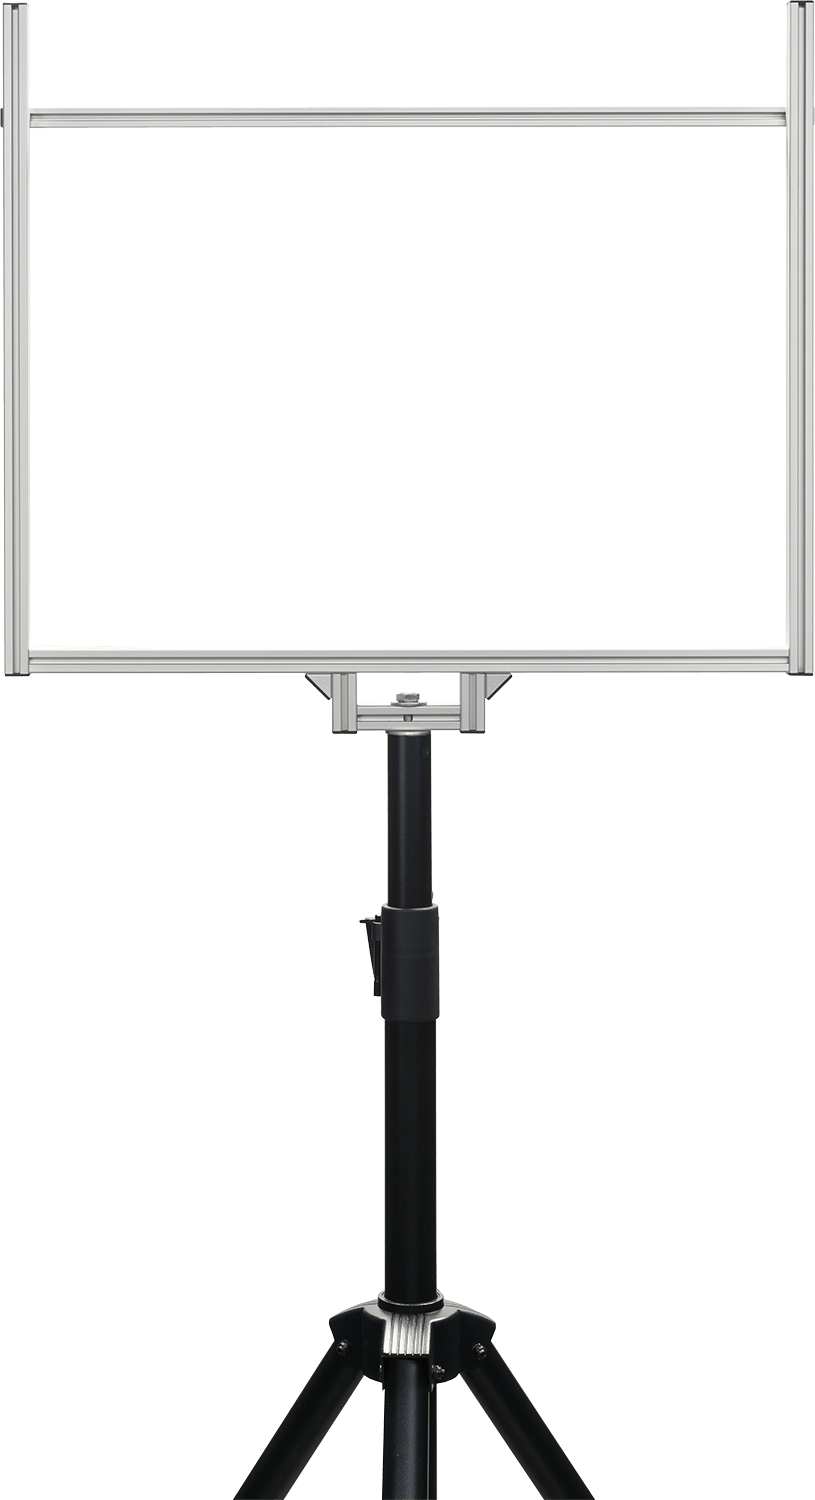 tripod mount frame image